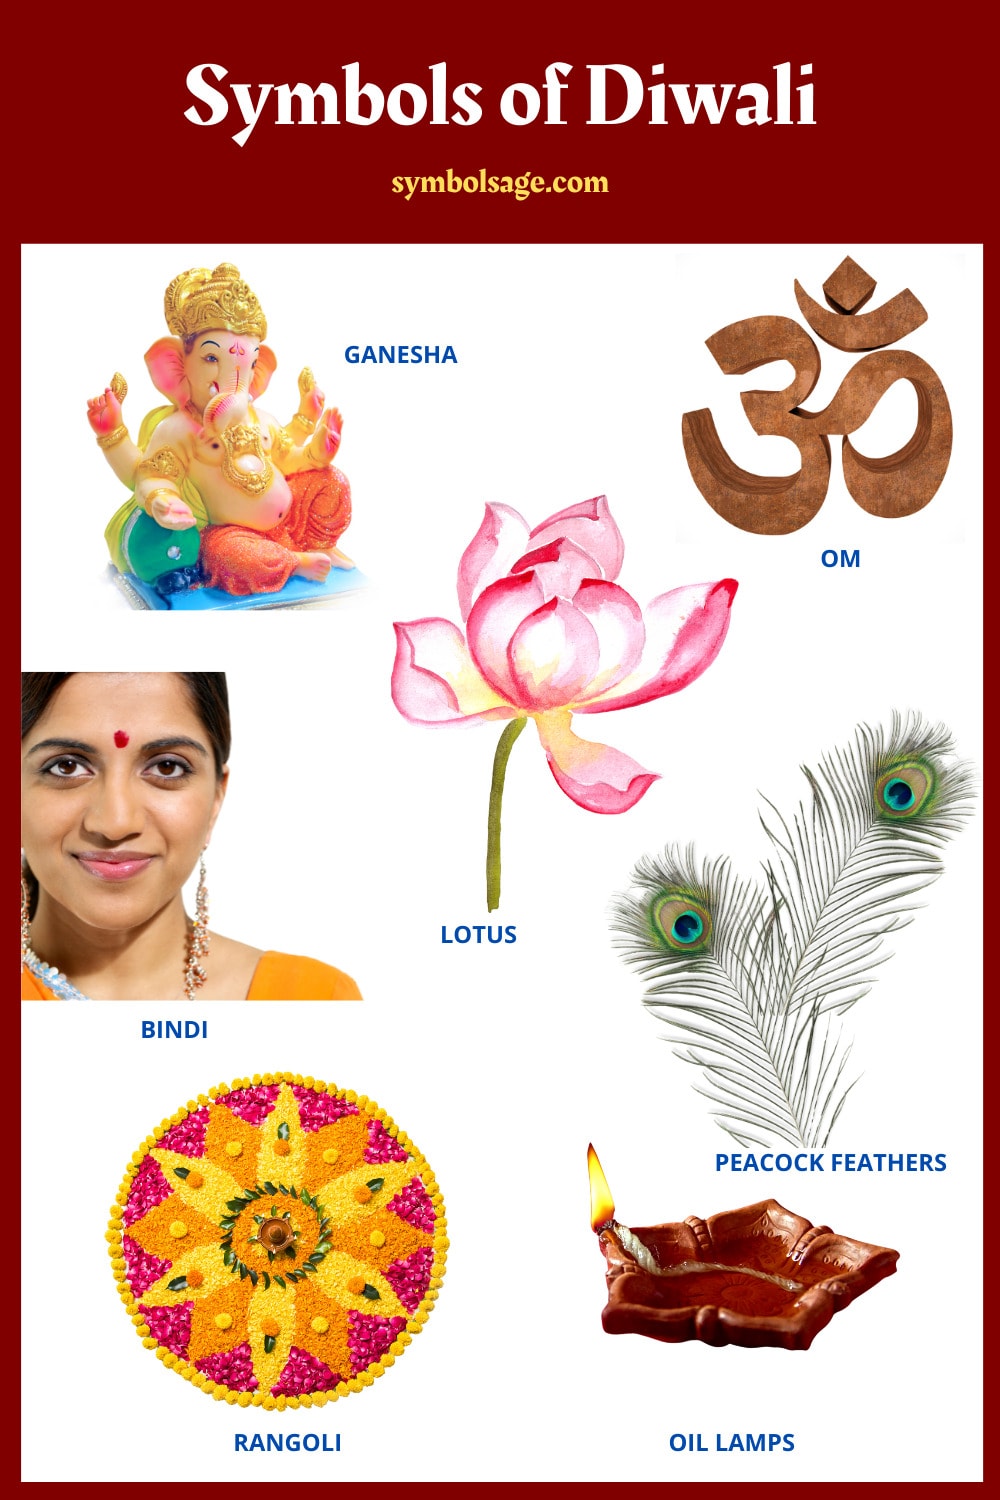 Symbols of Diwali